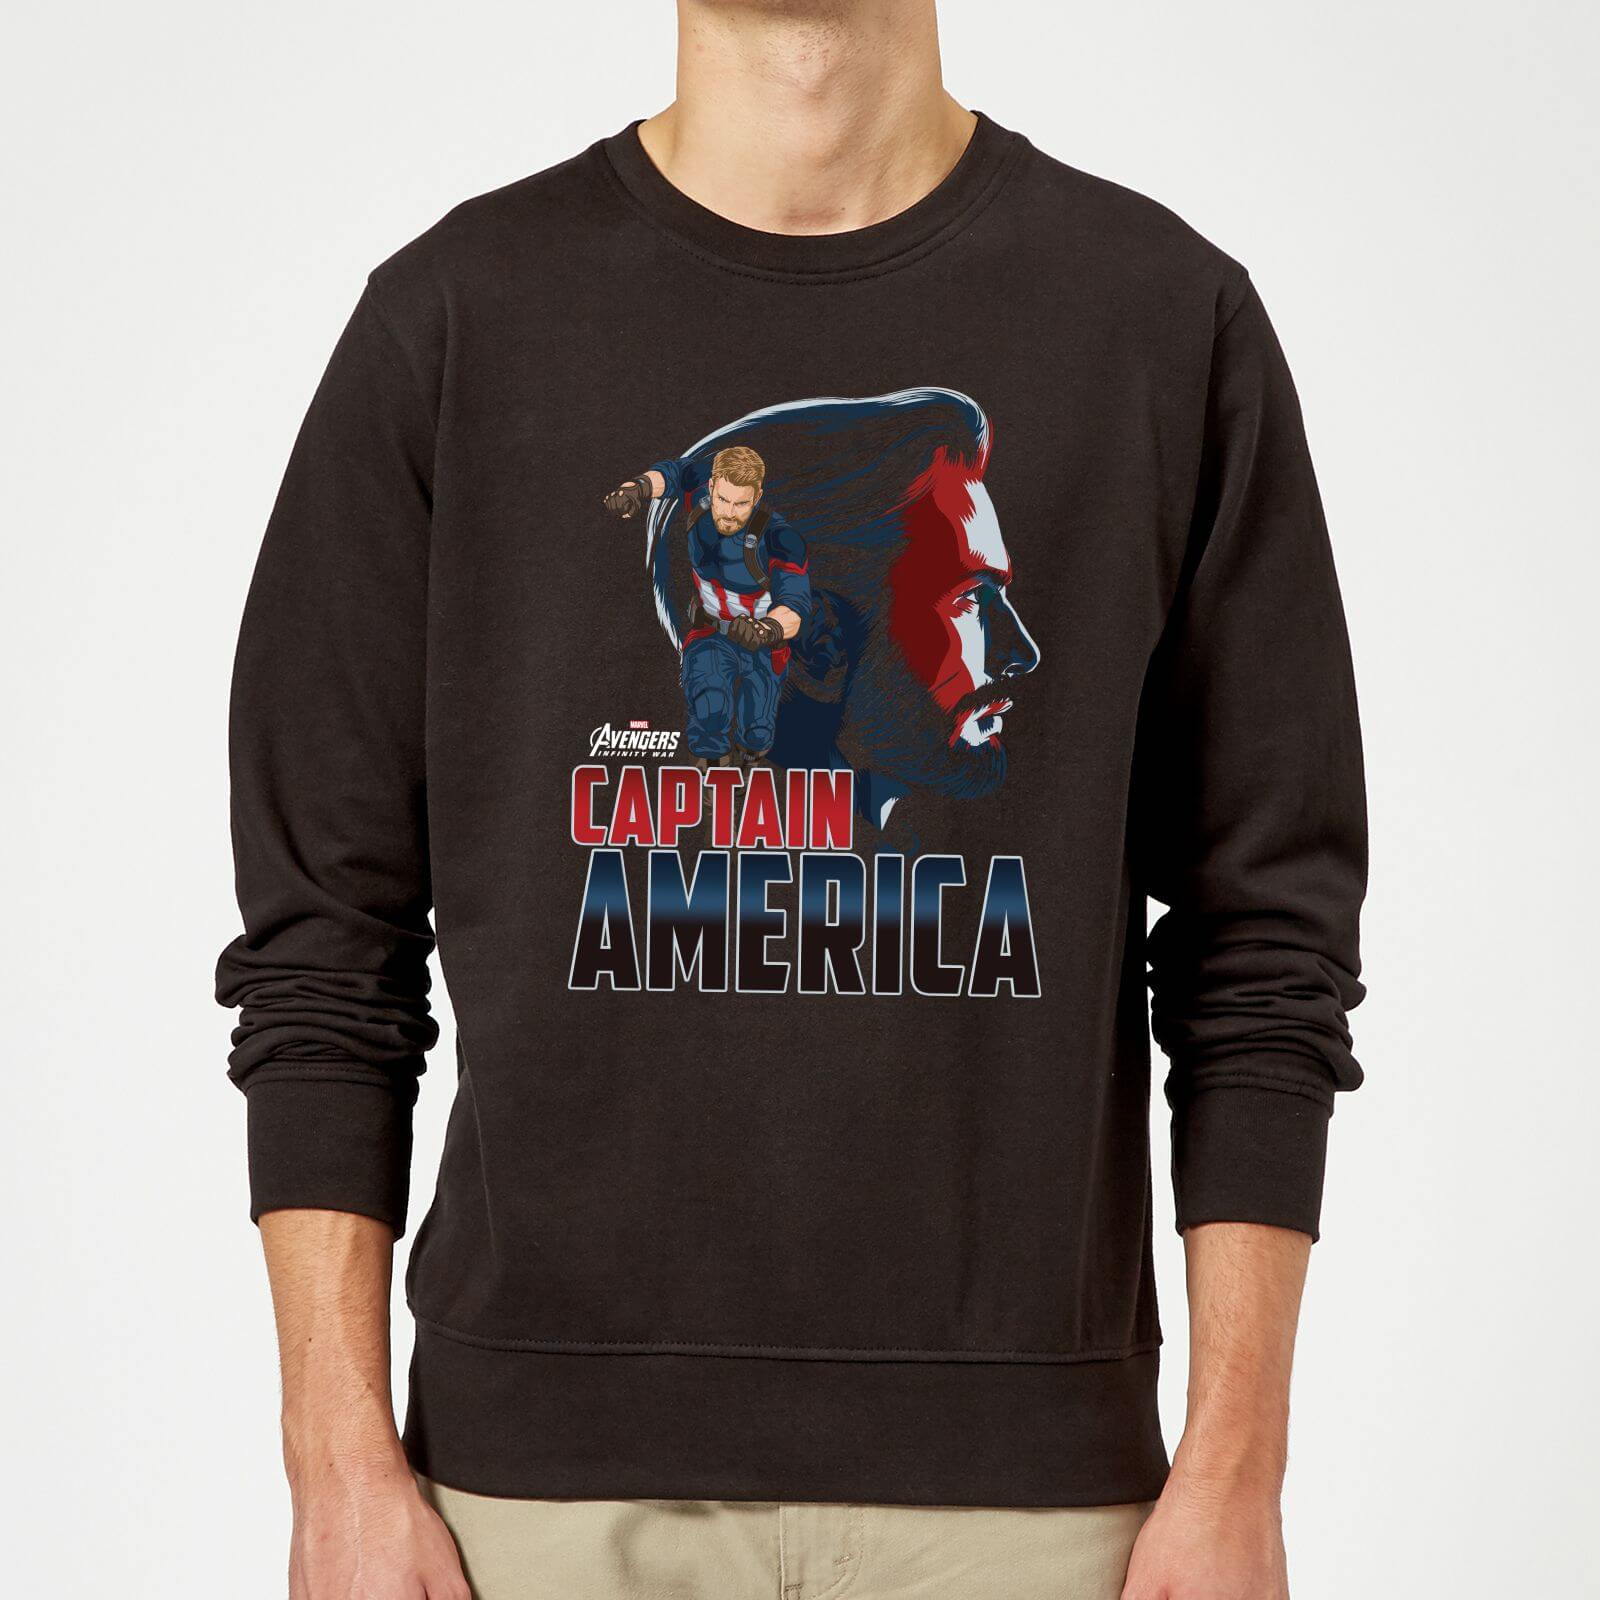 Avengers Captain America Sweatshirt - Black - S - Black